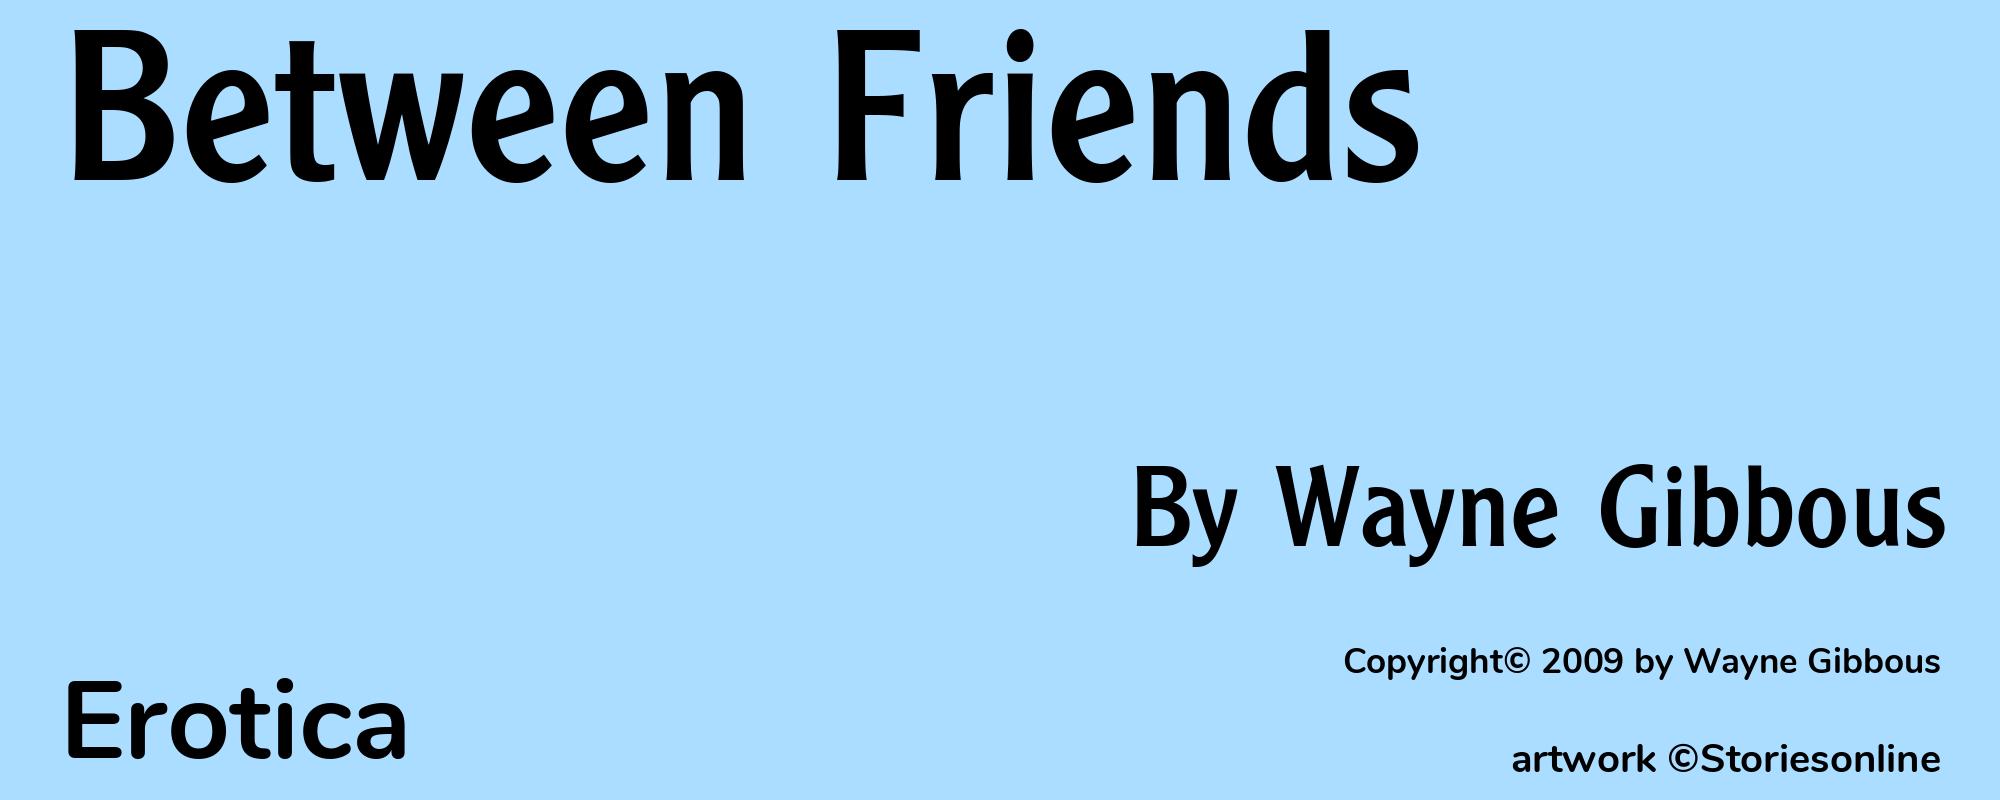 Between Friends - Cover